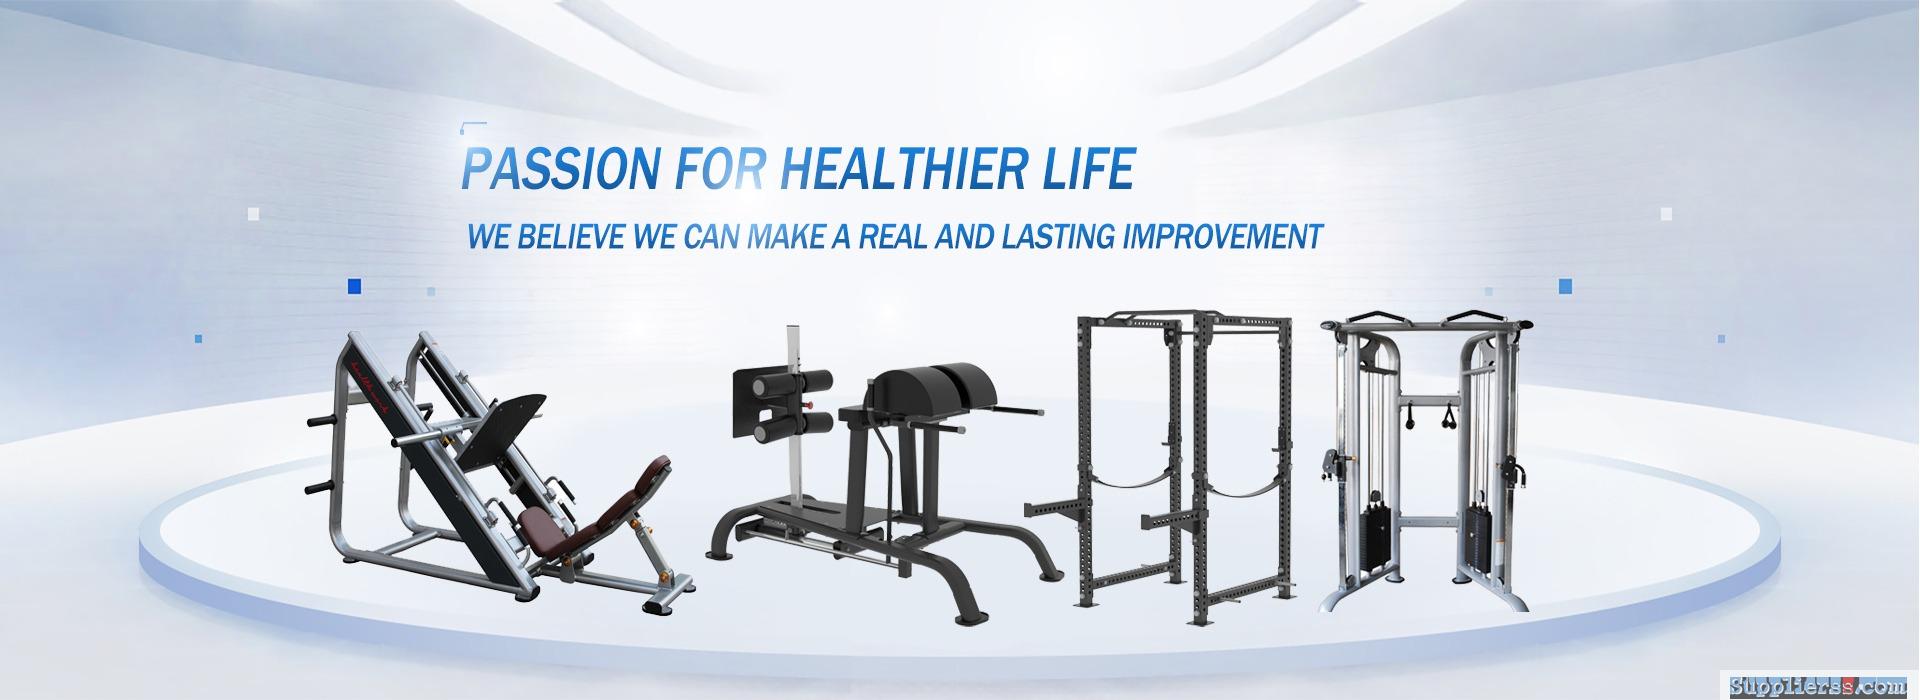 Fitness Equipment - Bench, Rack, Treadmill, Rehabilitation Equipment, Fitness Flooring